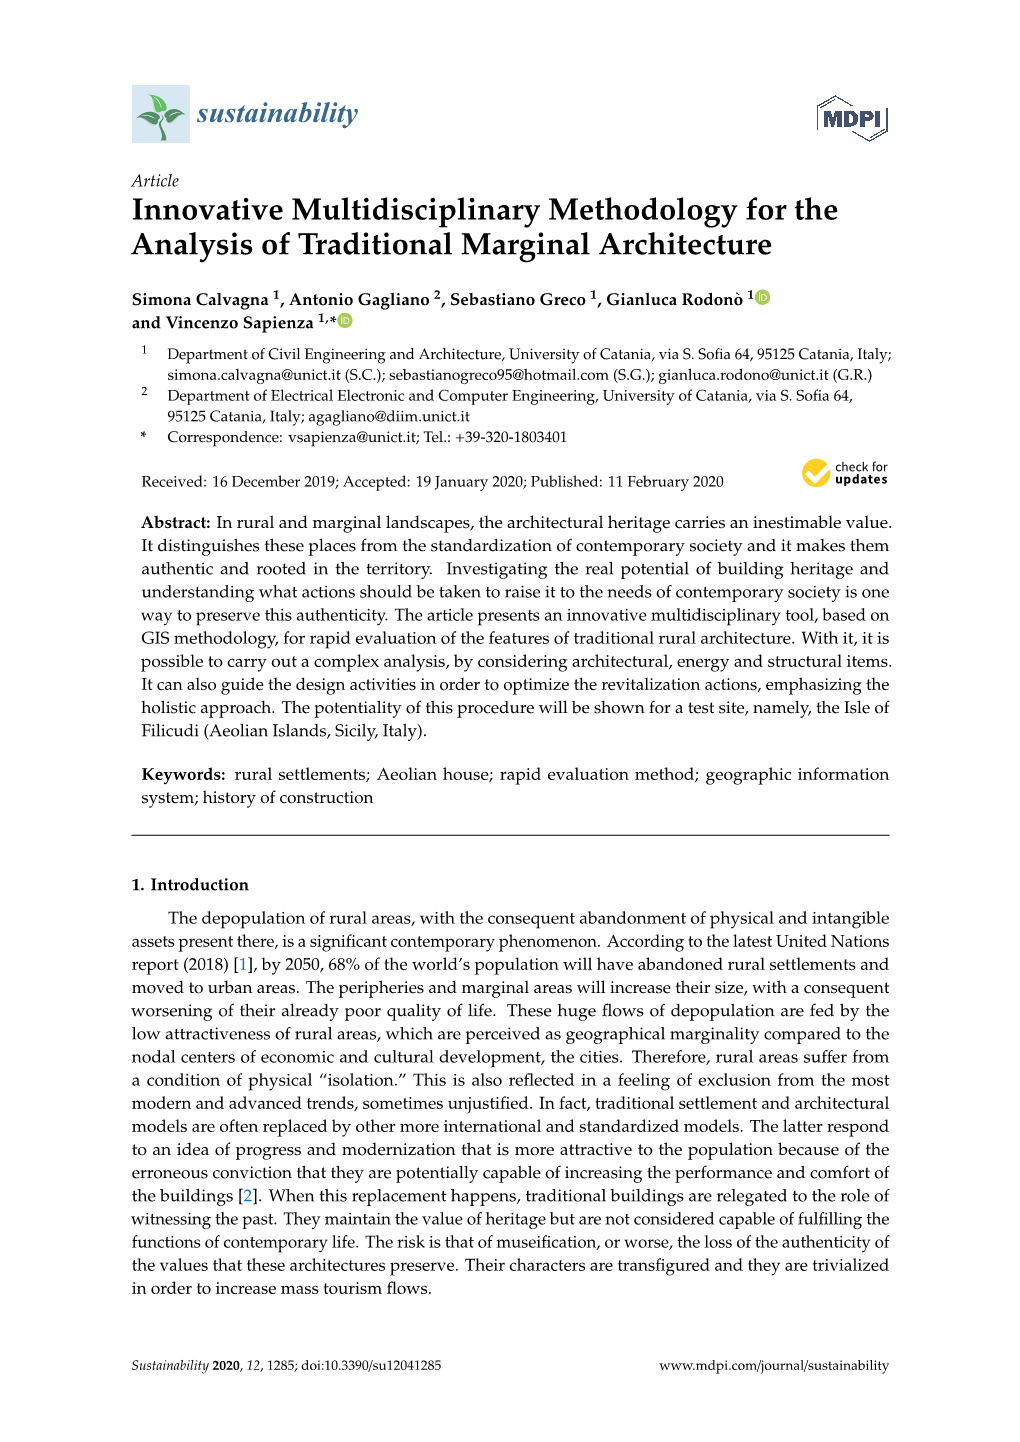 Innovative Multidisciplinary Methodology for the Analysis of Traditional Marginal Architecture